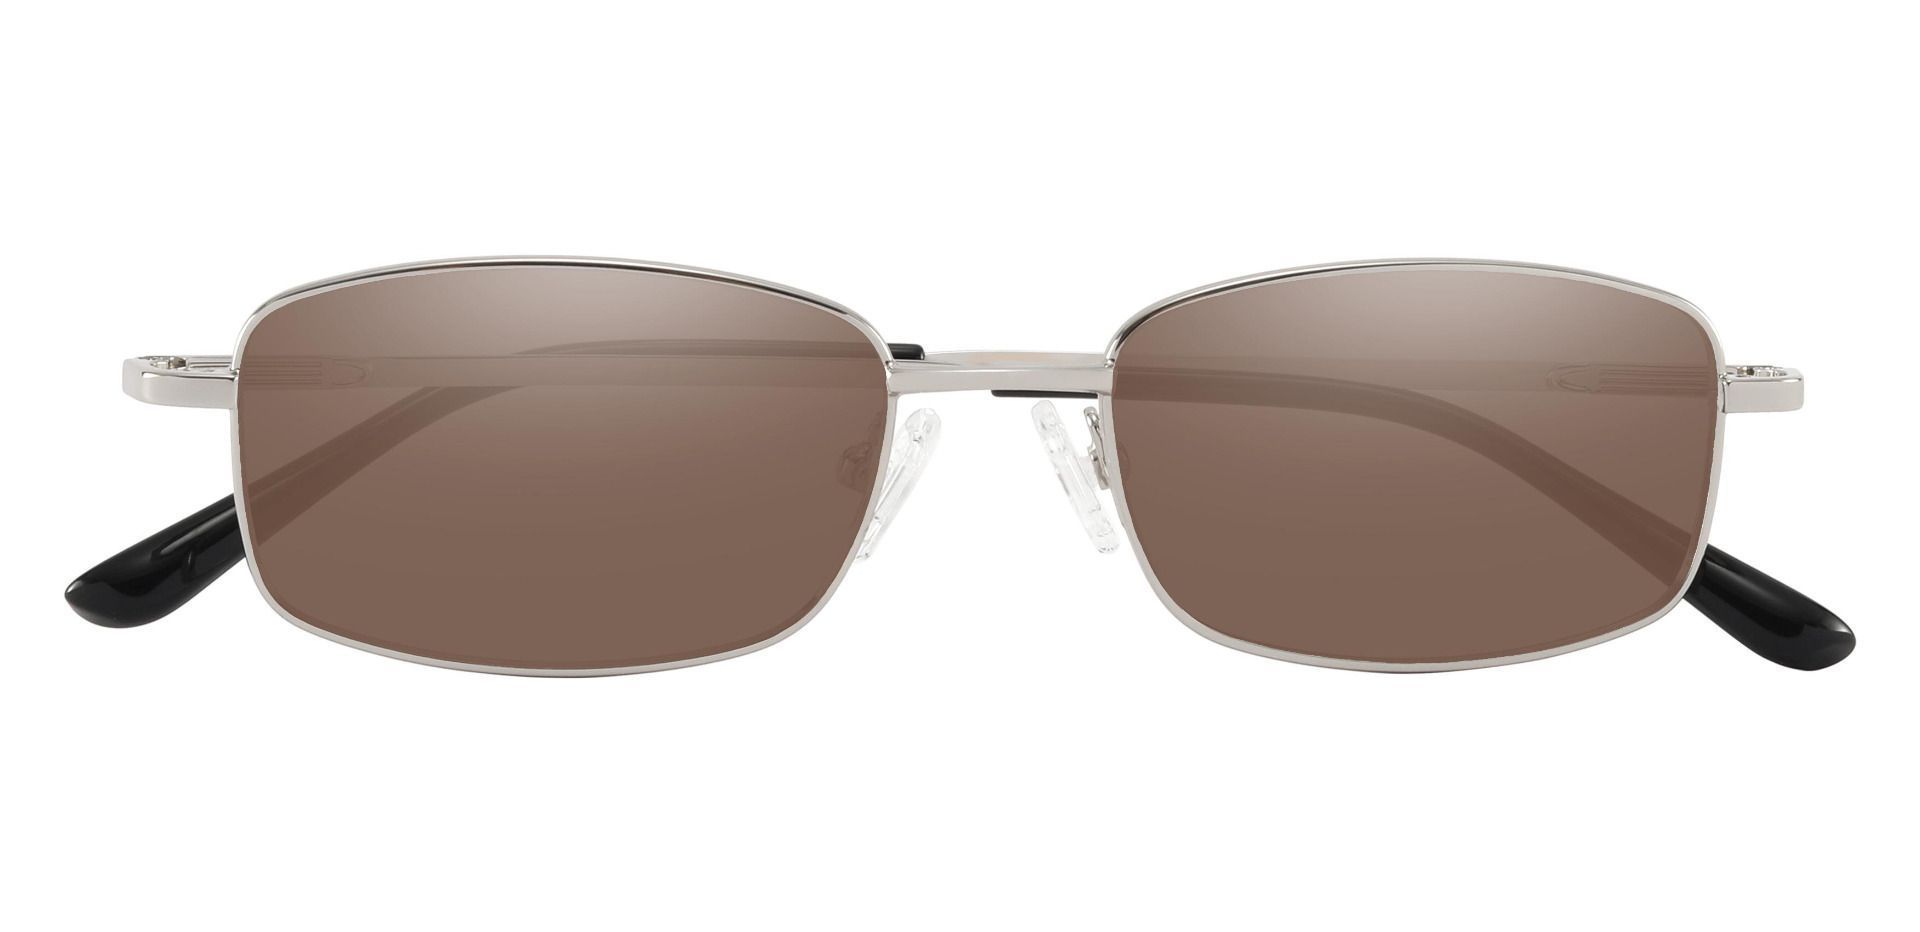 Hellman Rectangle Prescription Sunglasses - Silver Frame With Brown Lenses